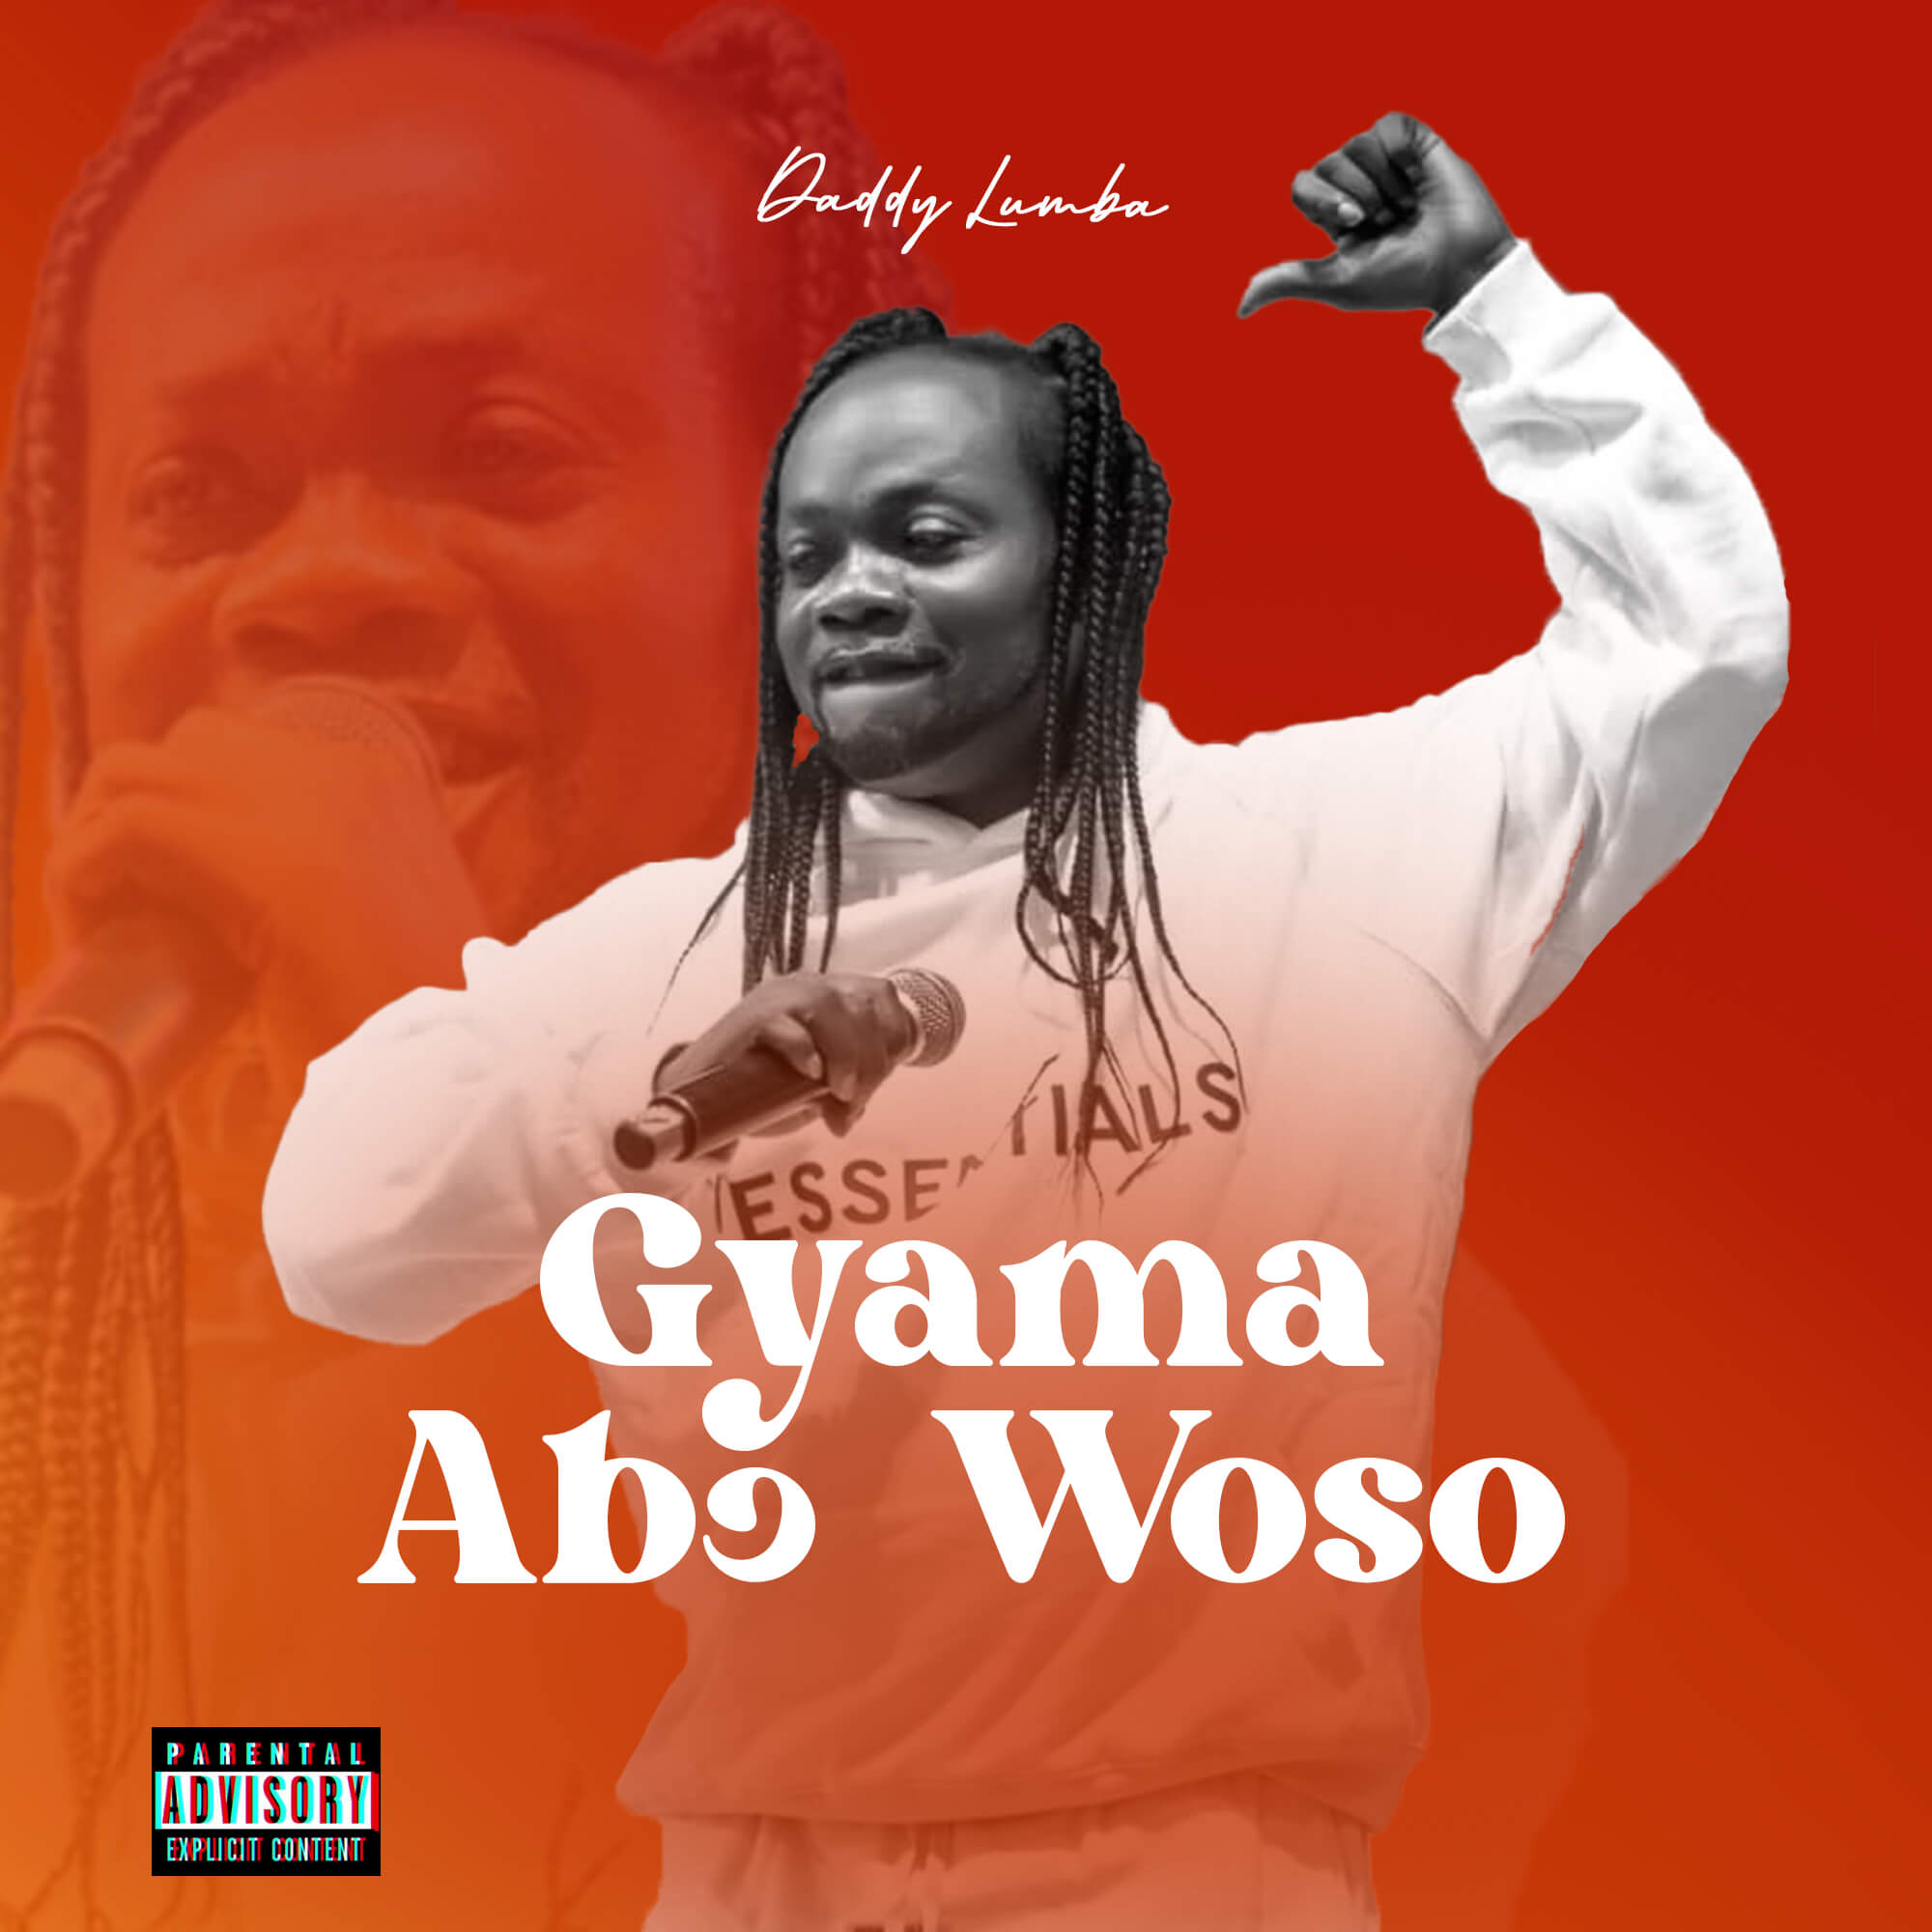 Daddy Lumba strikes gold again with 'Gyama Abo Woso' single